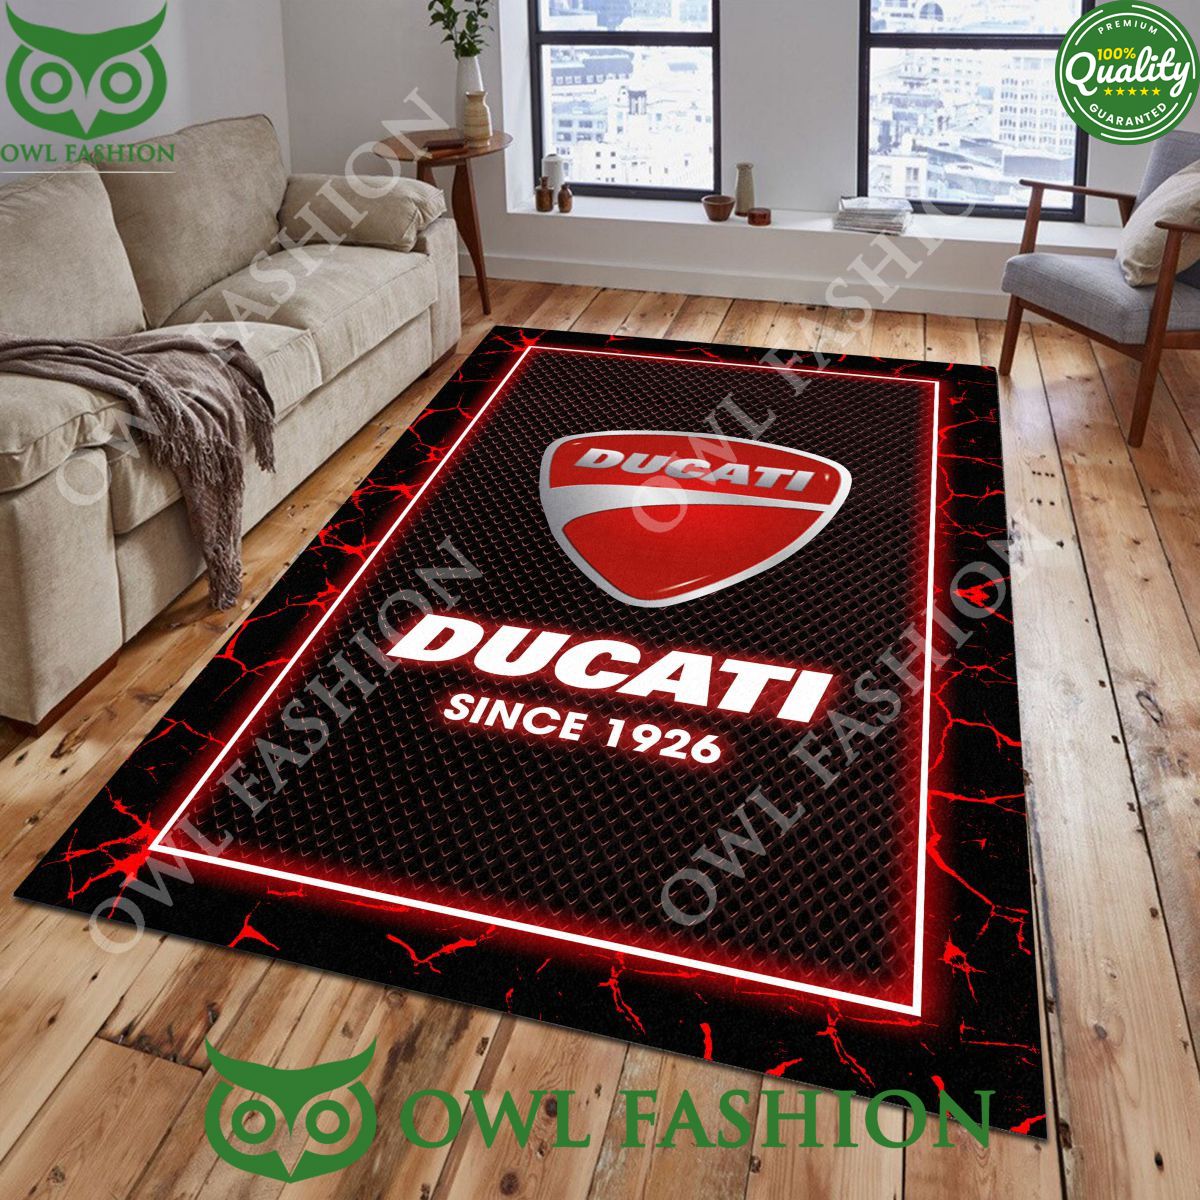 Ducati Italian Motor Living Room Custom Color Carpet Rug You look too weak